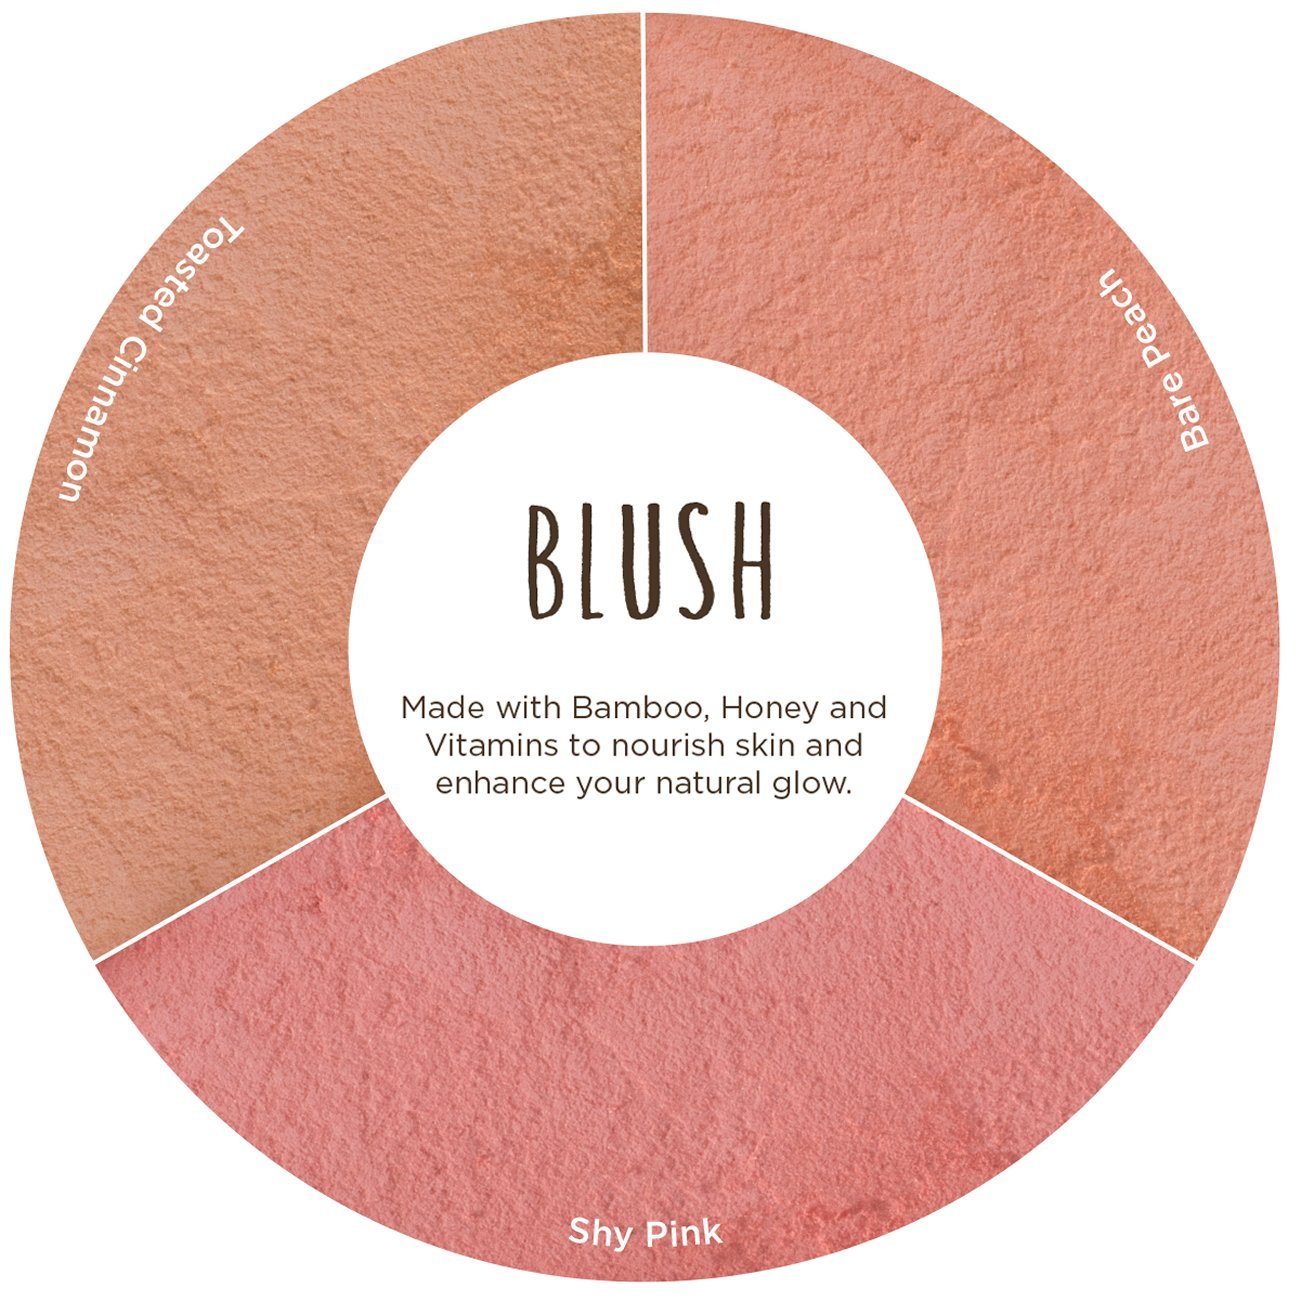 Burt's Bees 100% Natural Origin Blush with Vitamin E, Shy Pink - 0.19 Ounce